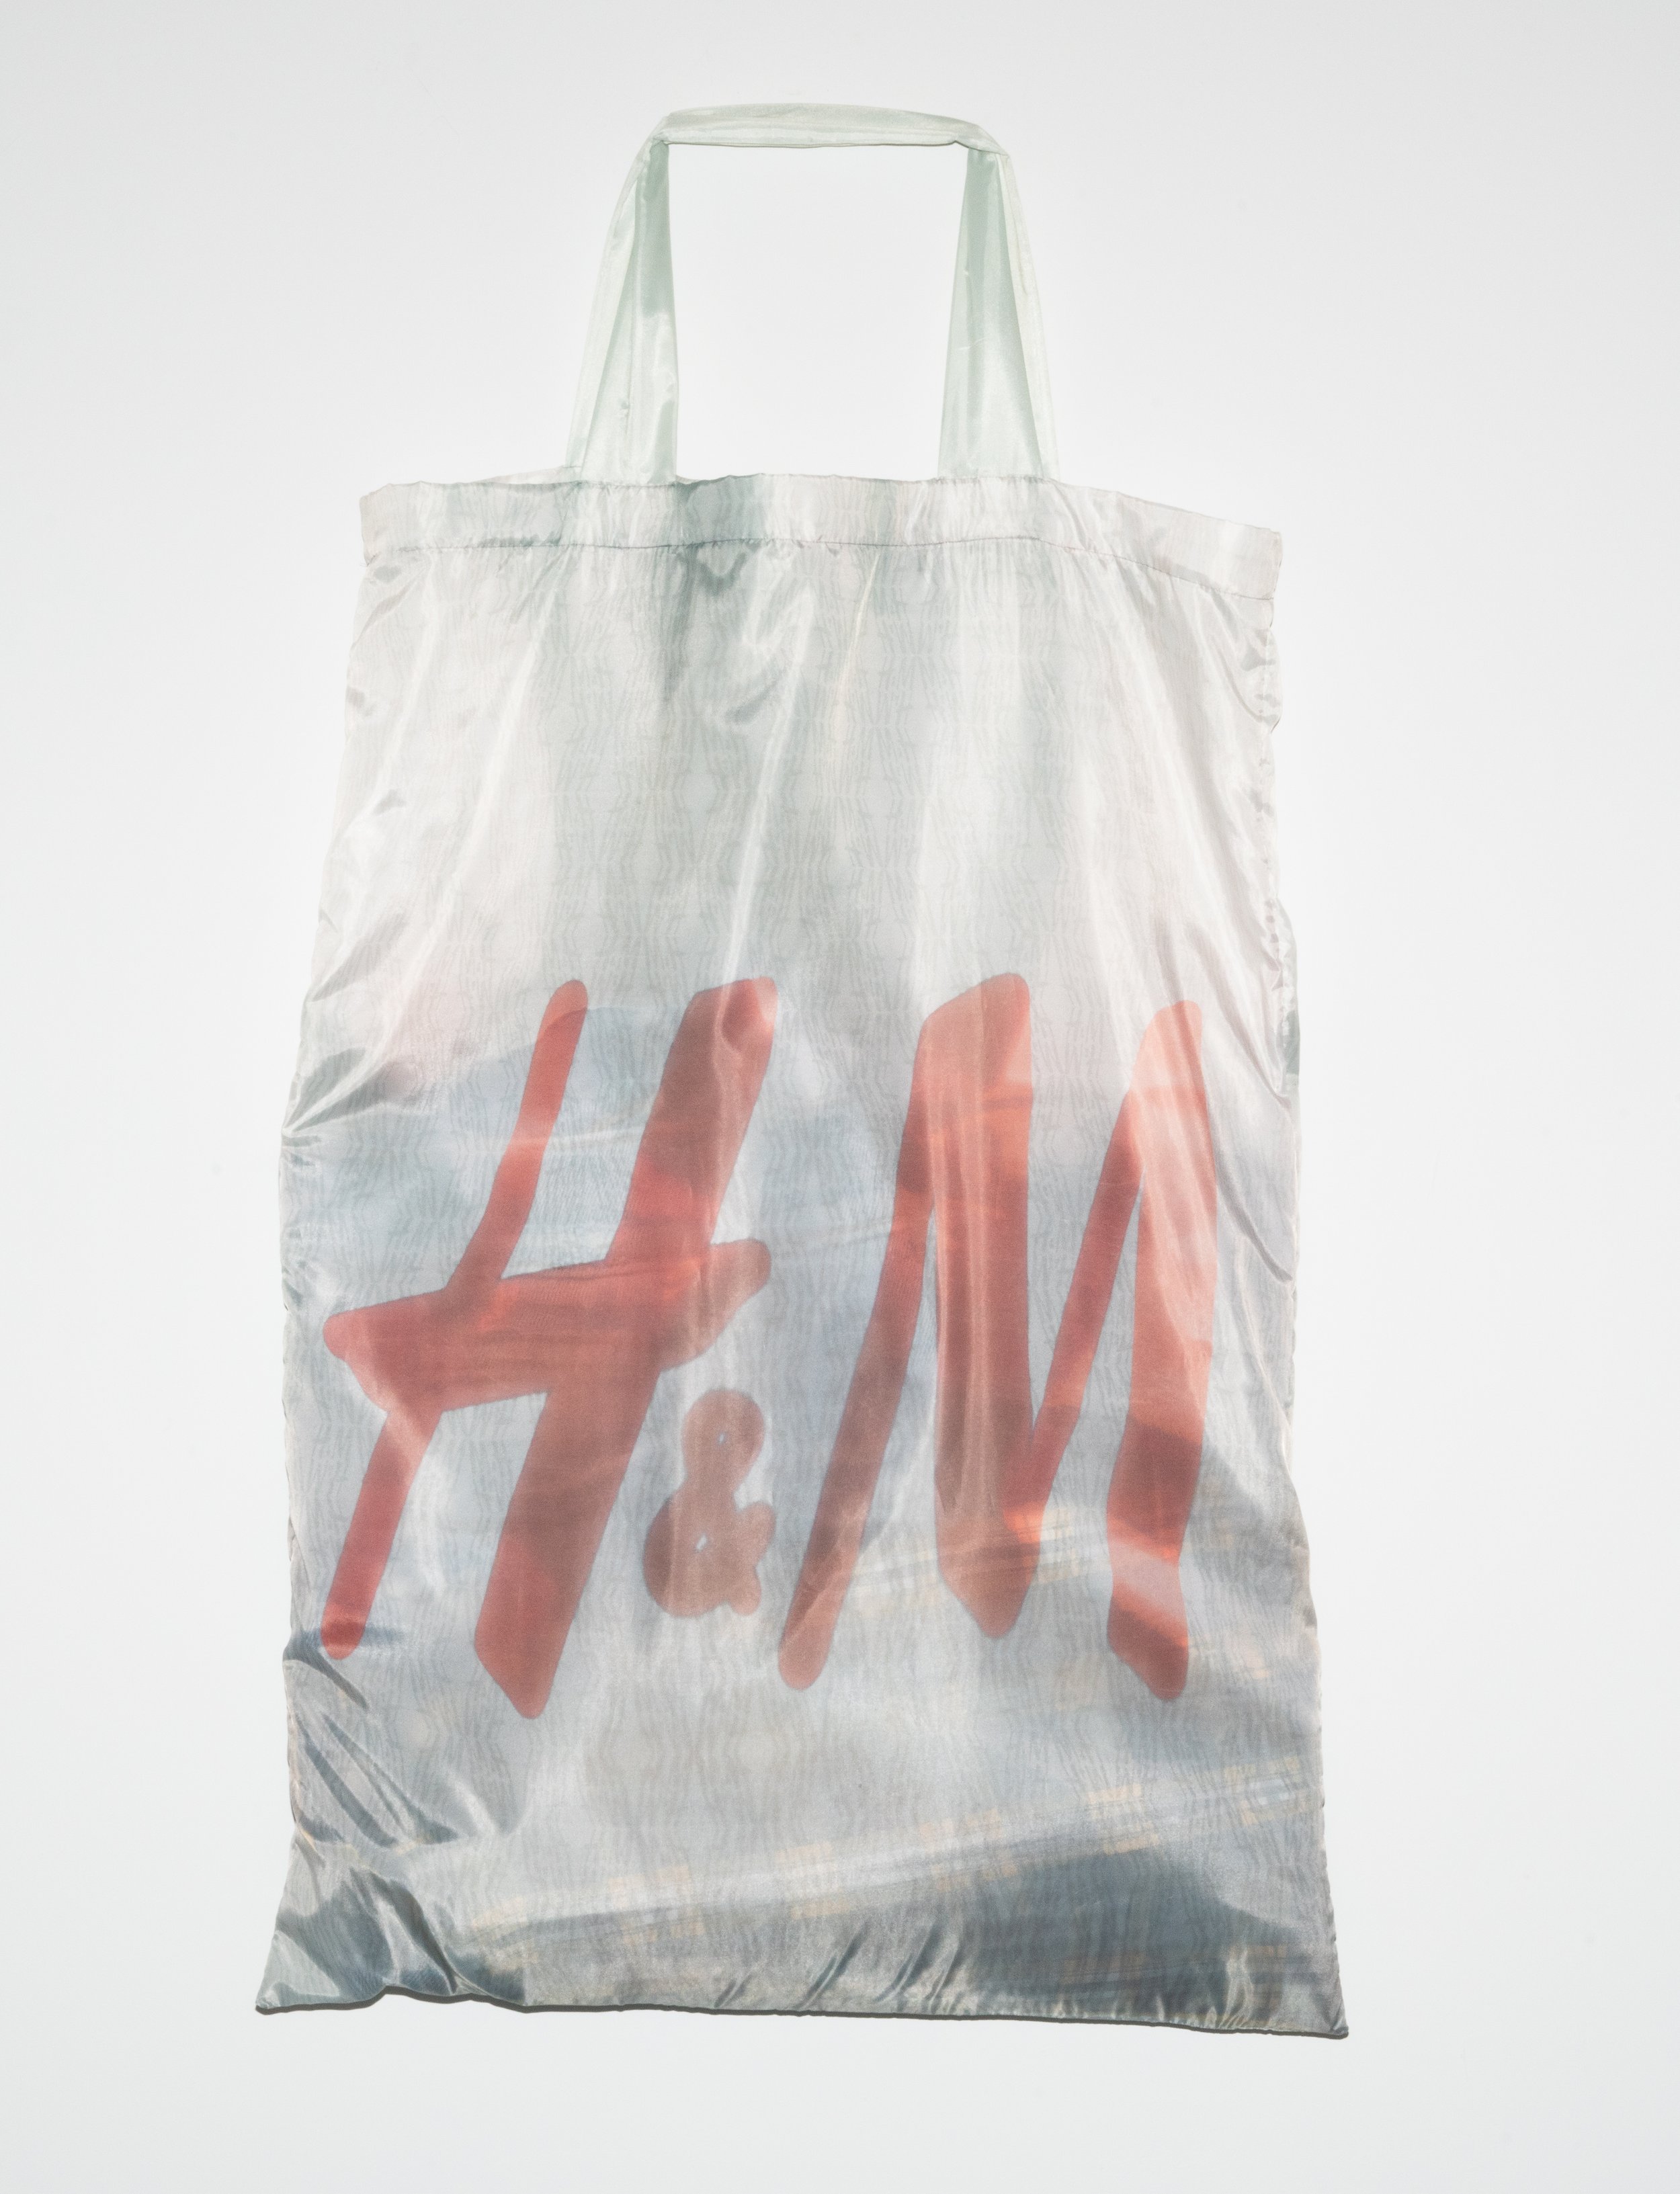 H&M Bag_Front.jpg